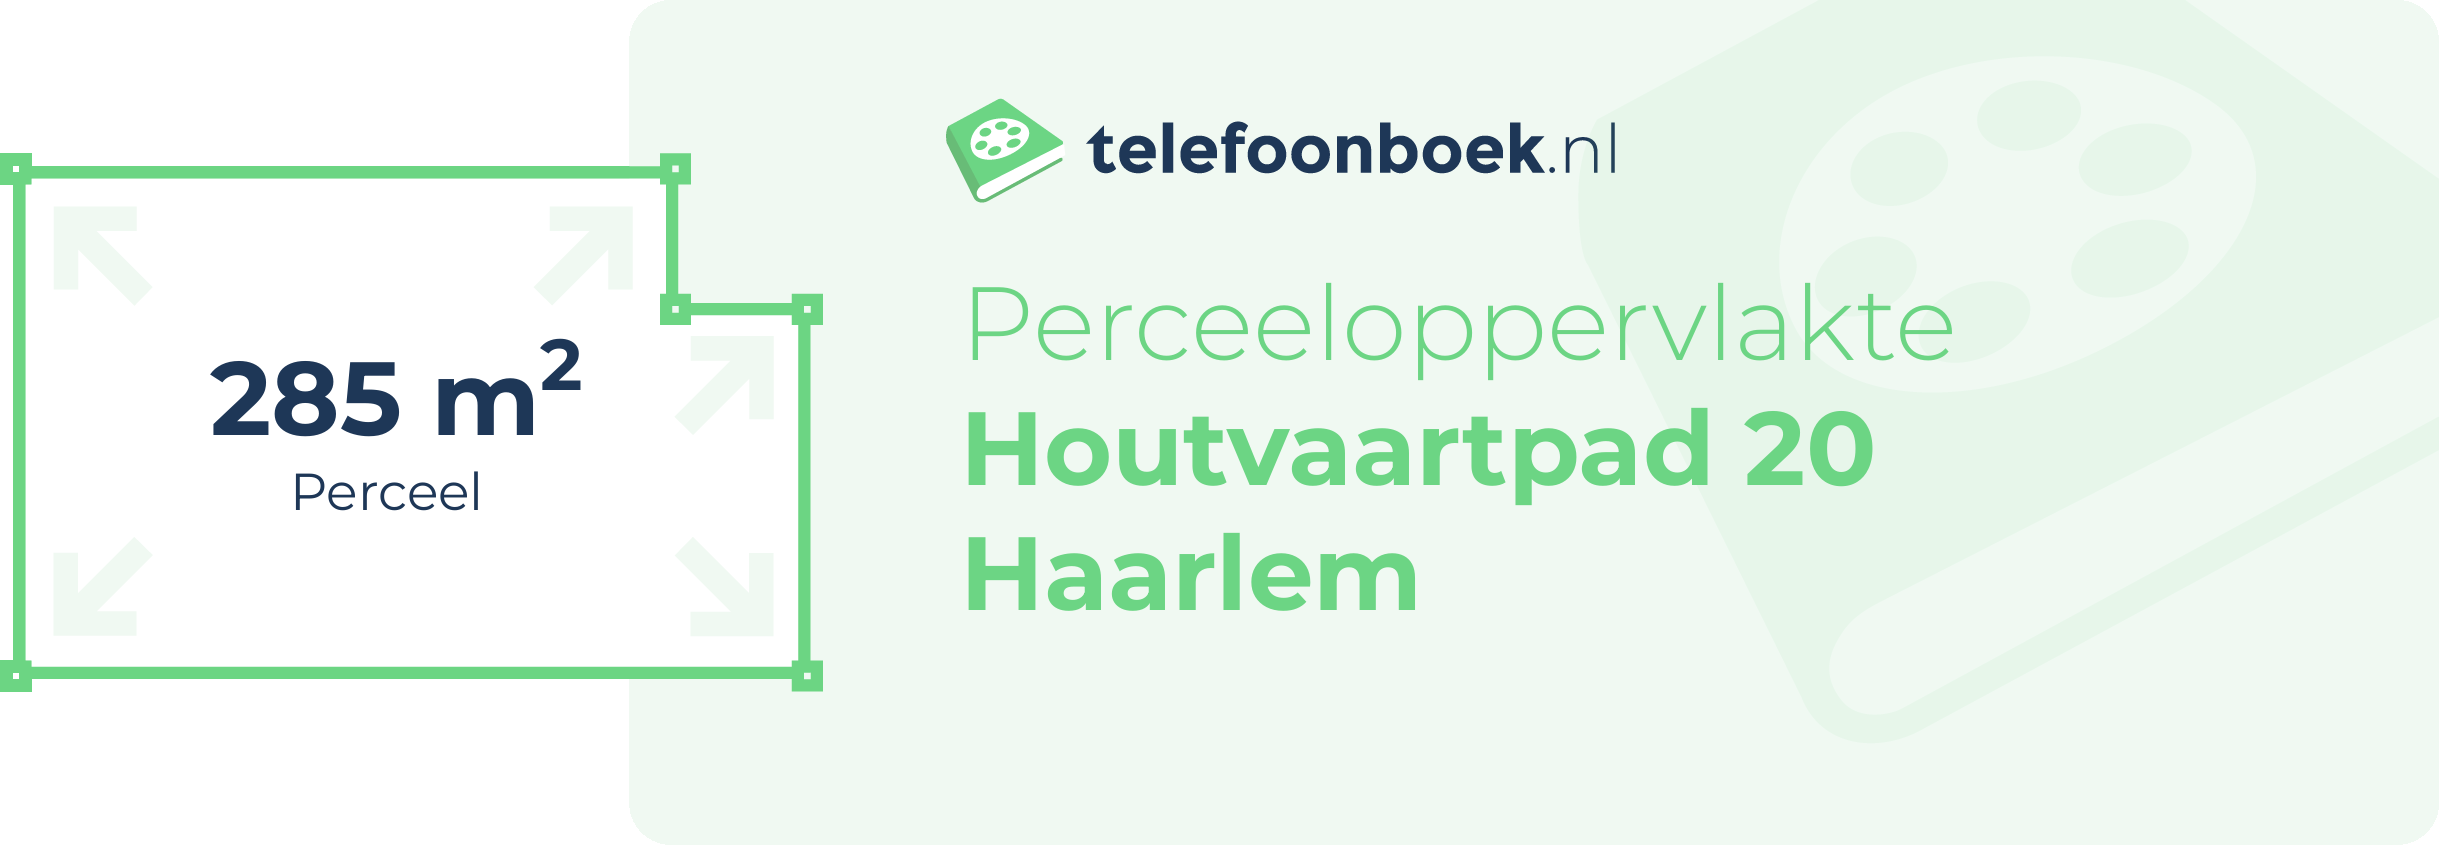 Perceeloppervlakte Houtvaartpad 20 Haarlem